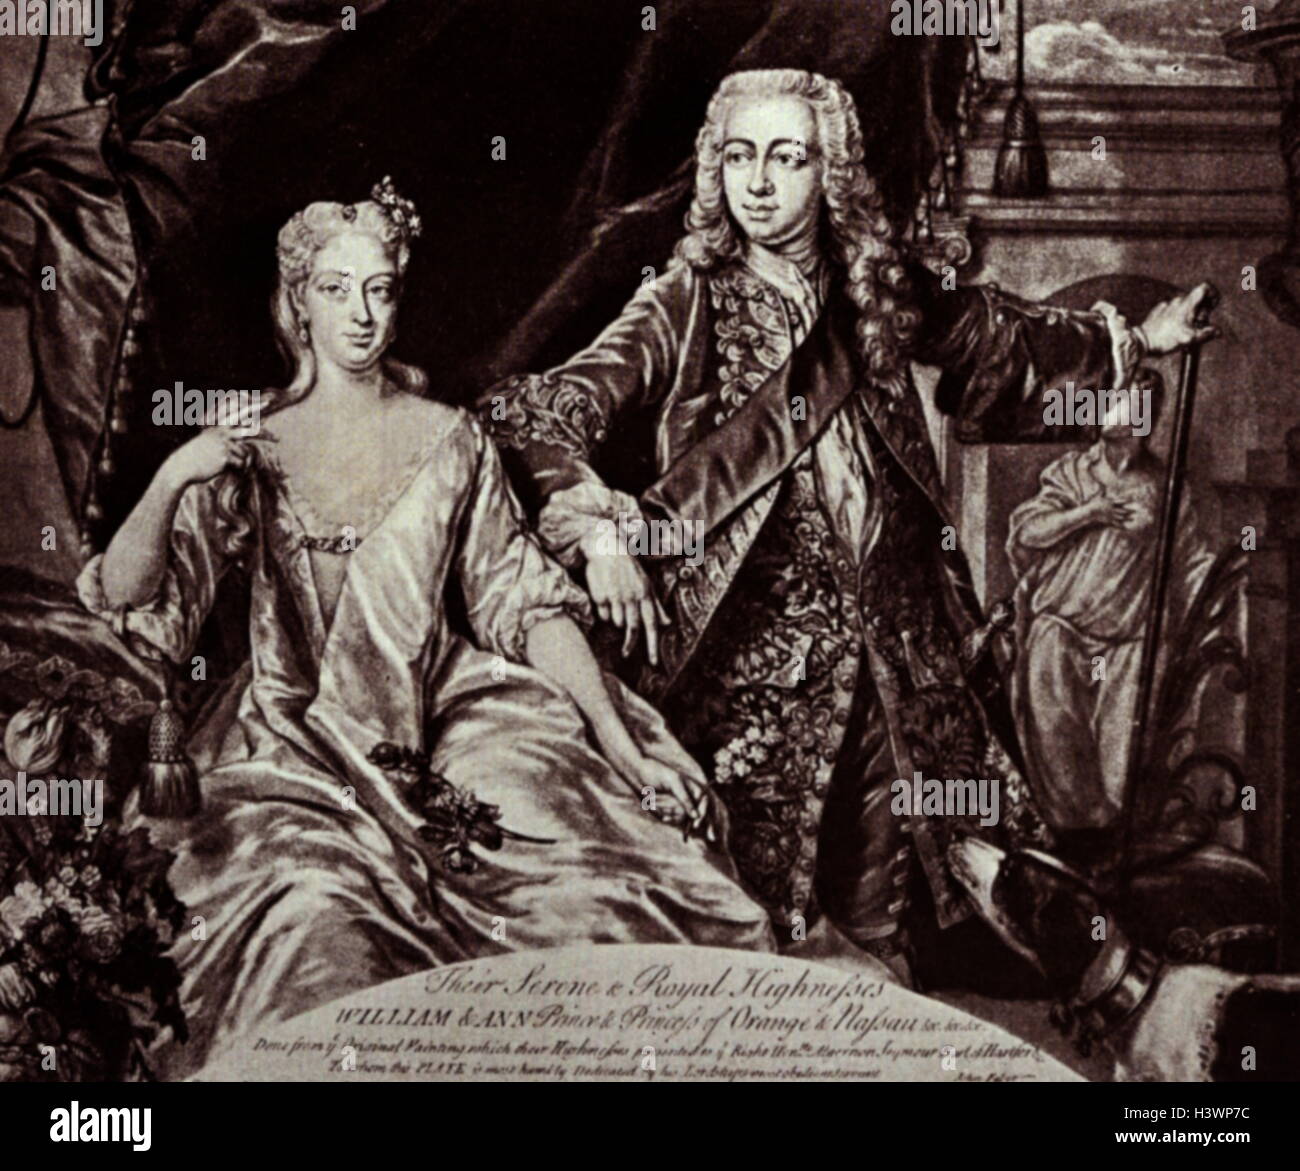 Portrait of William IV, Prince of Orange (1711-1751) and Anne, Princess Royal and Princess of Orange (1709-1759). Dated 18th Century Stock Photo